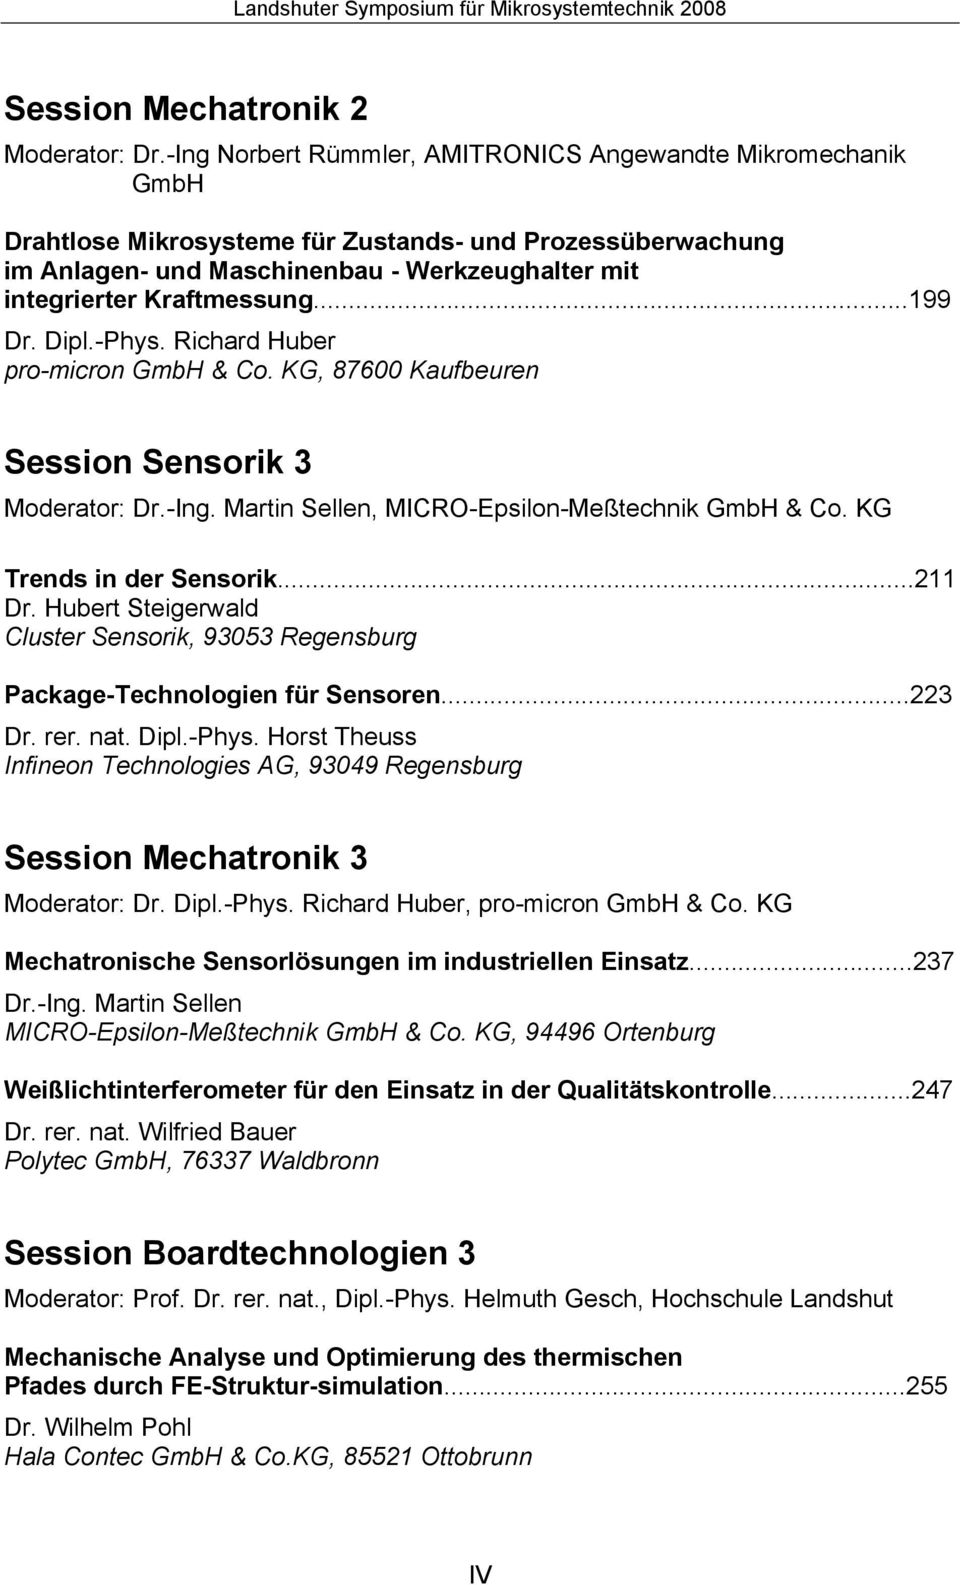 ..199 Dr. Dipl.-Phys. Richard Huber pro-micron GmbH & Co. KG, 87600 Kaufbeuren Session Sensorik 3 Moderator: Dr.-Ing. Martin Sellen, MICRO-Epsilon-Meßtechnik GmbH & Co. KG Trends in der Sensorik.